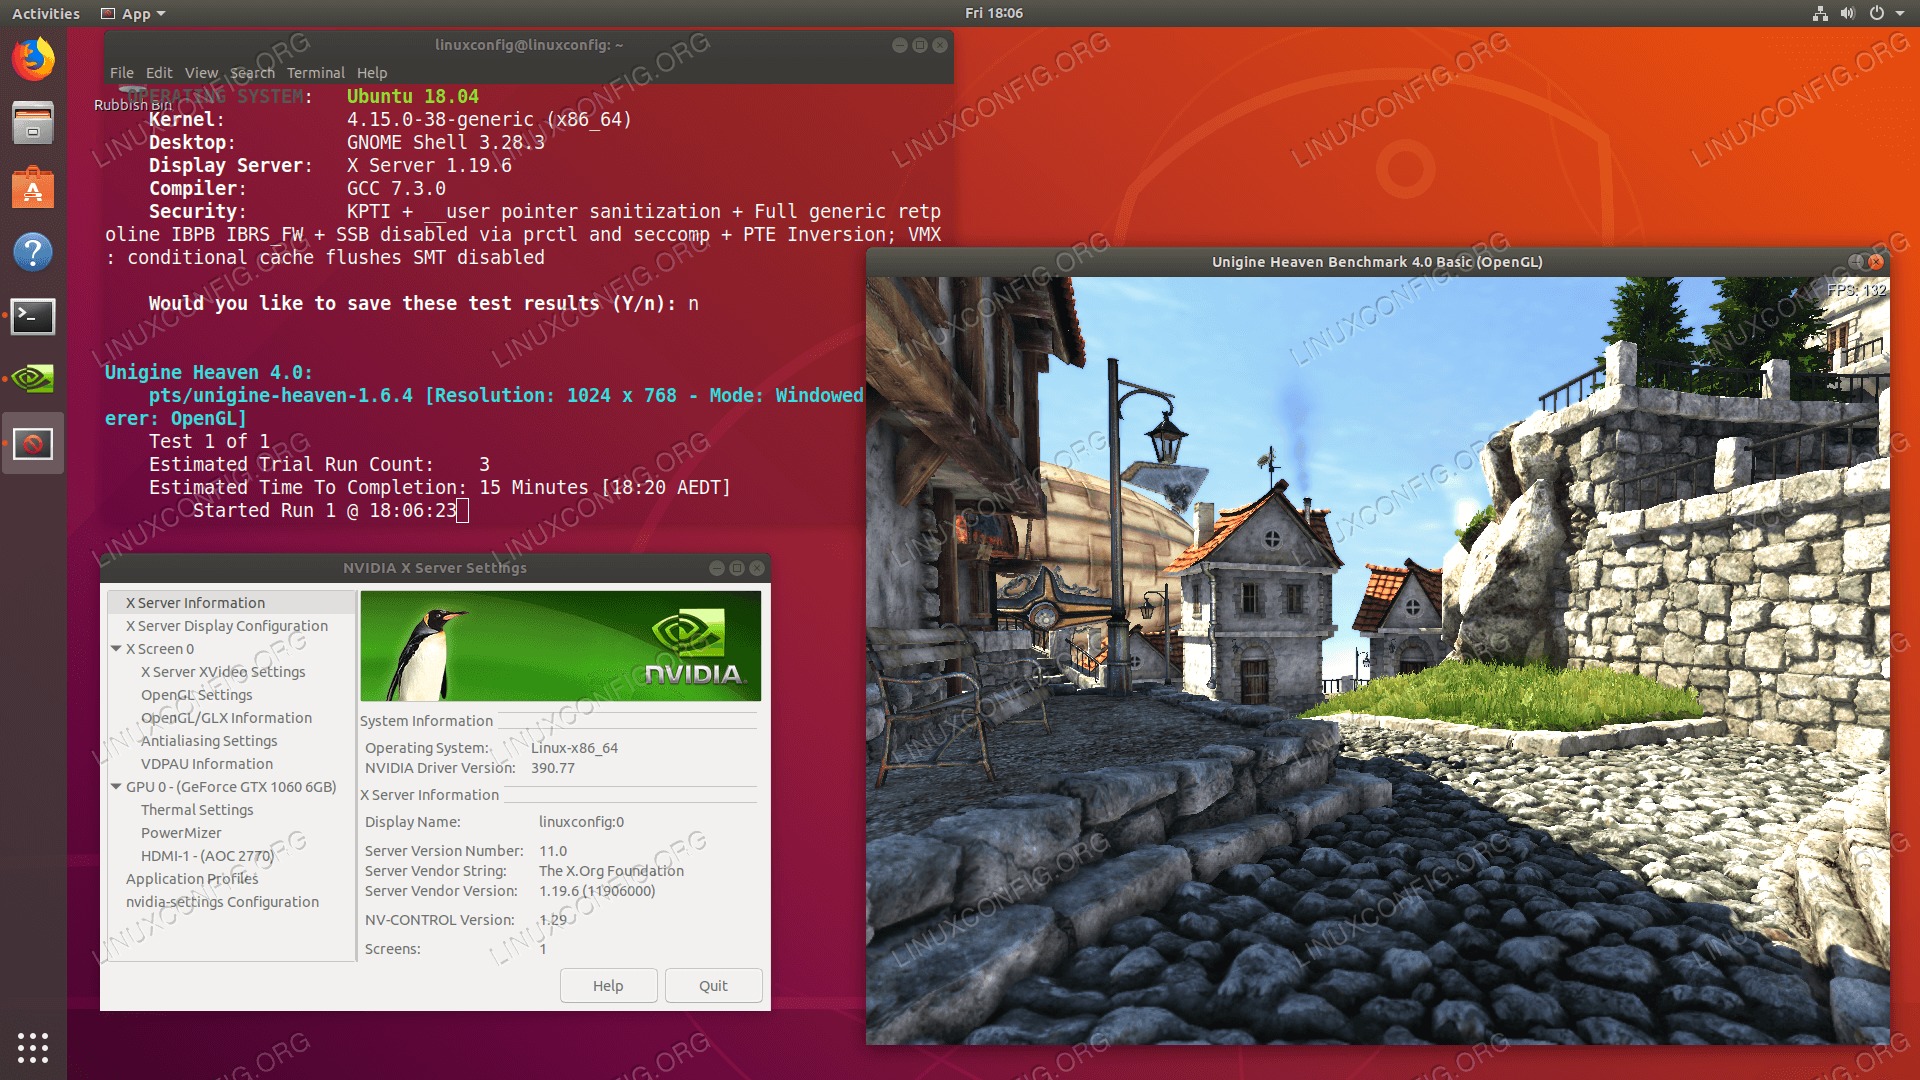 Installed NVIDIA drivers on Ubuntu 18.04 Bionic Beaver